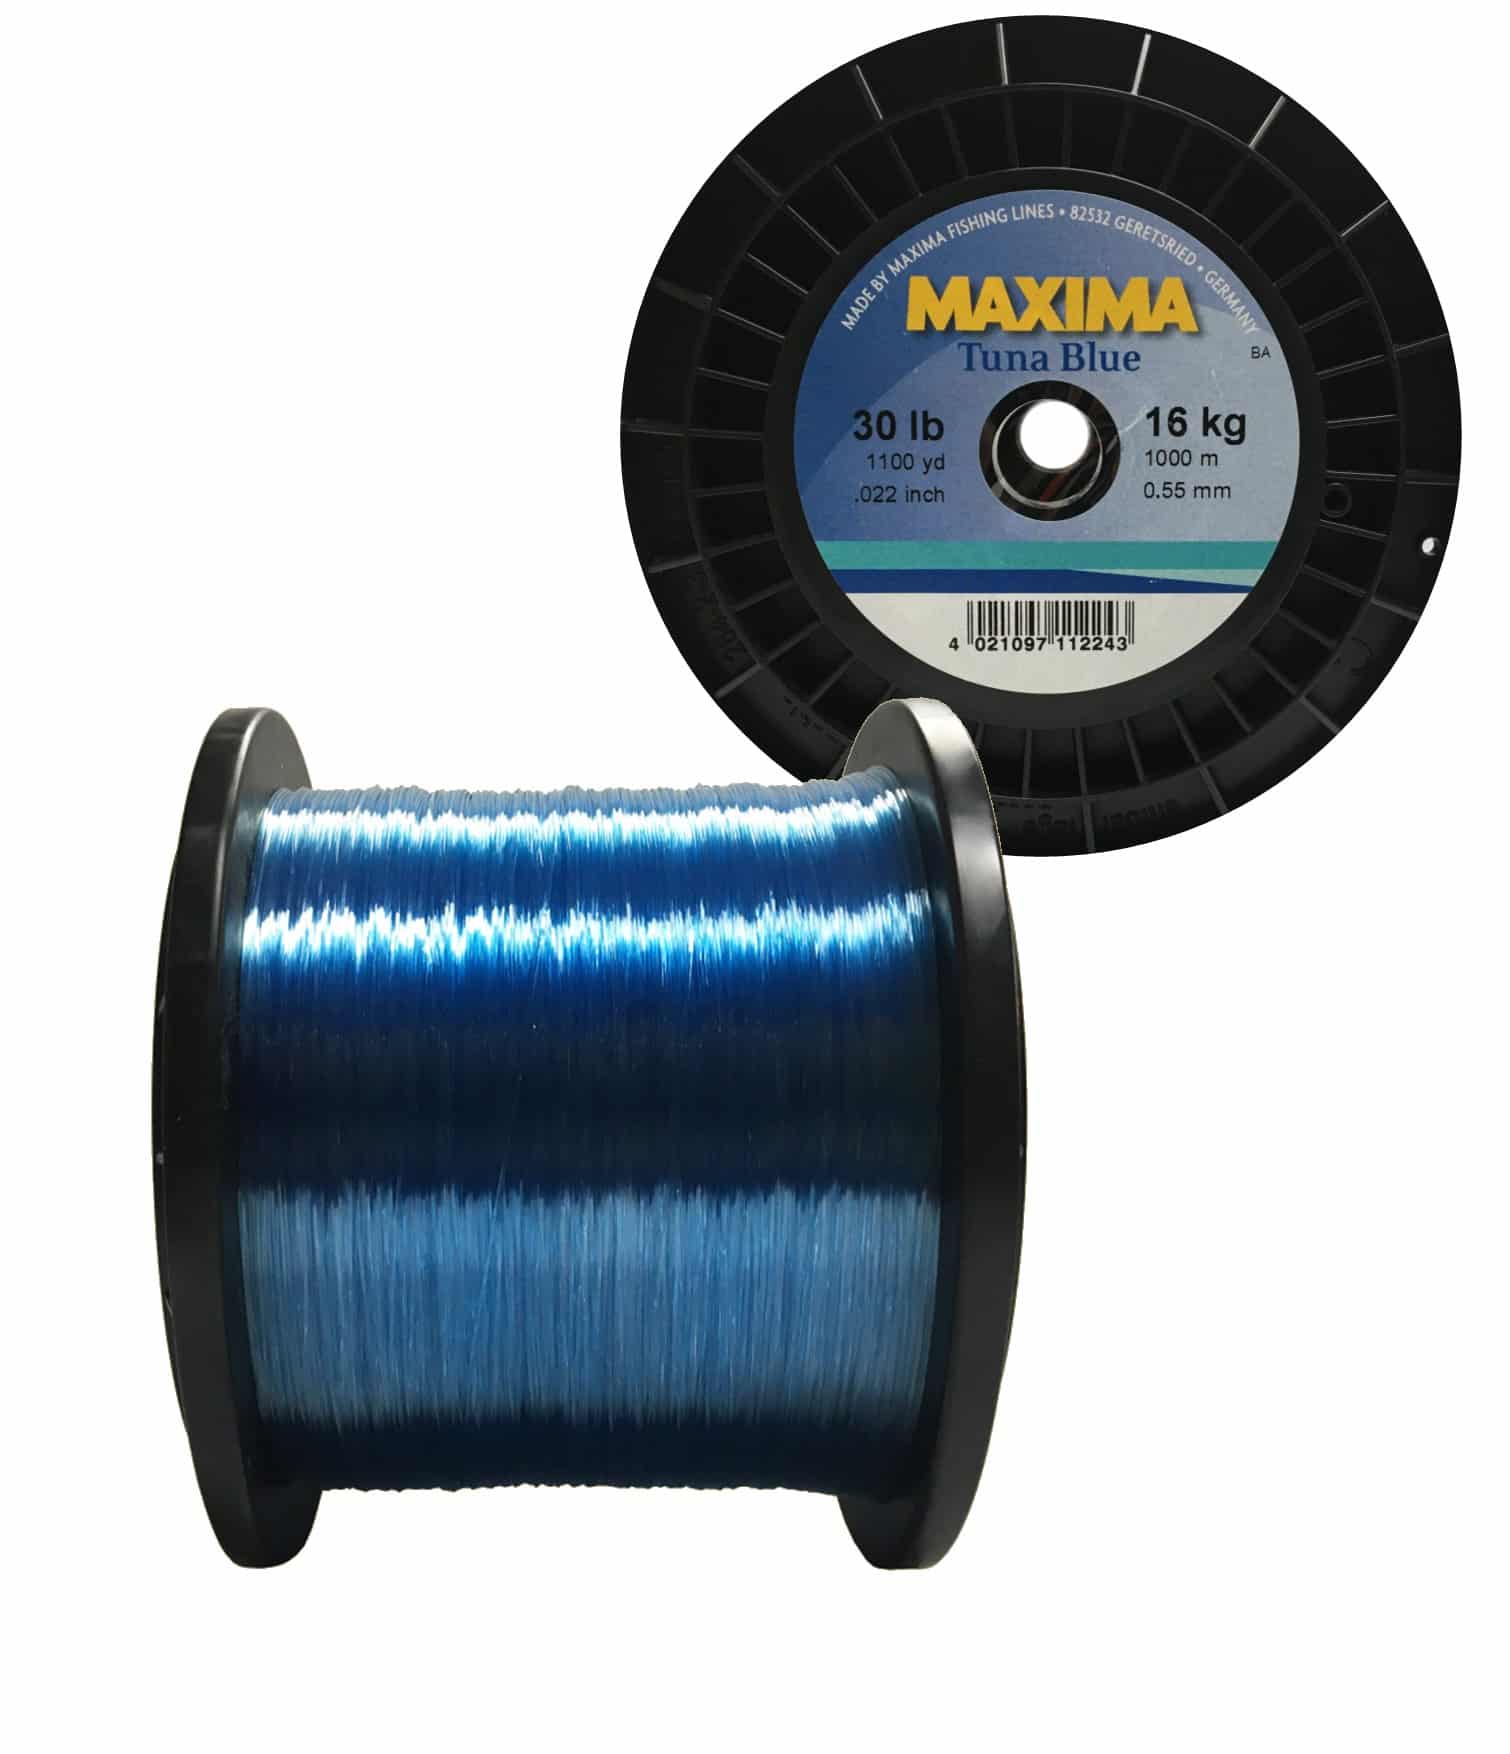 Maxima Nylon Fishing Line 5.5KG/12LB .32MM Colour Tuna Blue 600m